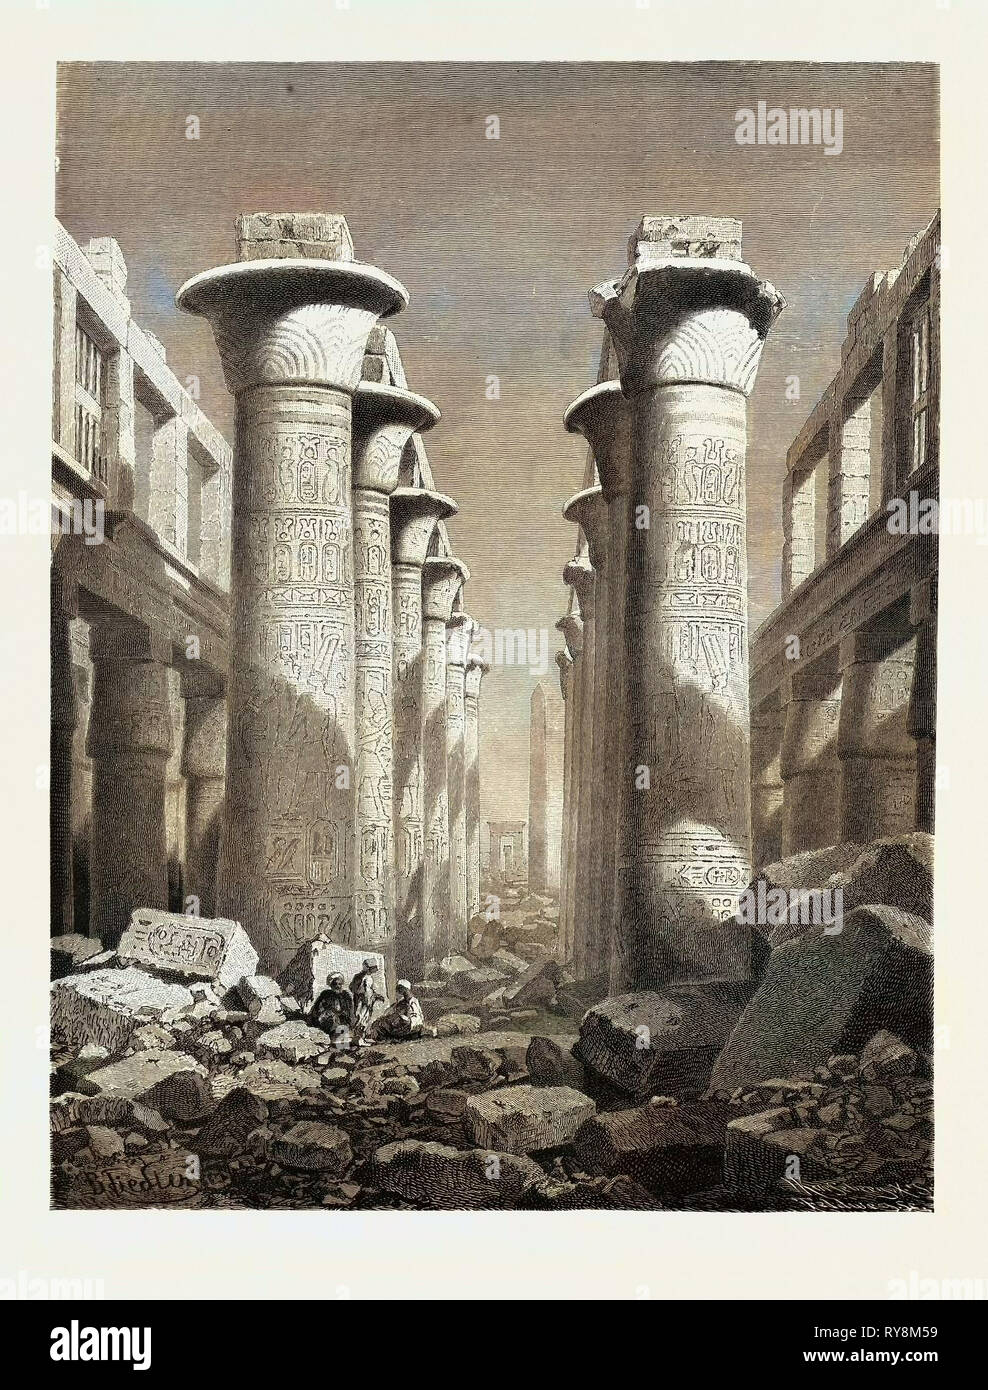 THE GREAT HALL OF PILLARS AT KARNAK. Egypt, engraving 1879 Stock Photo